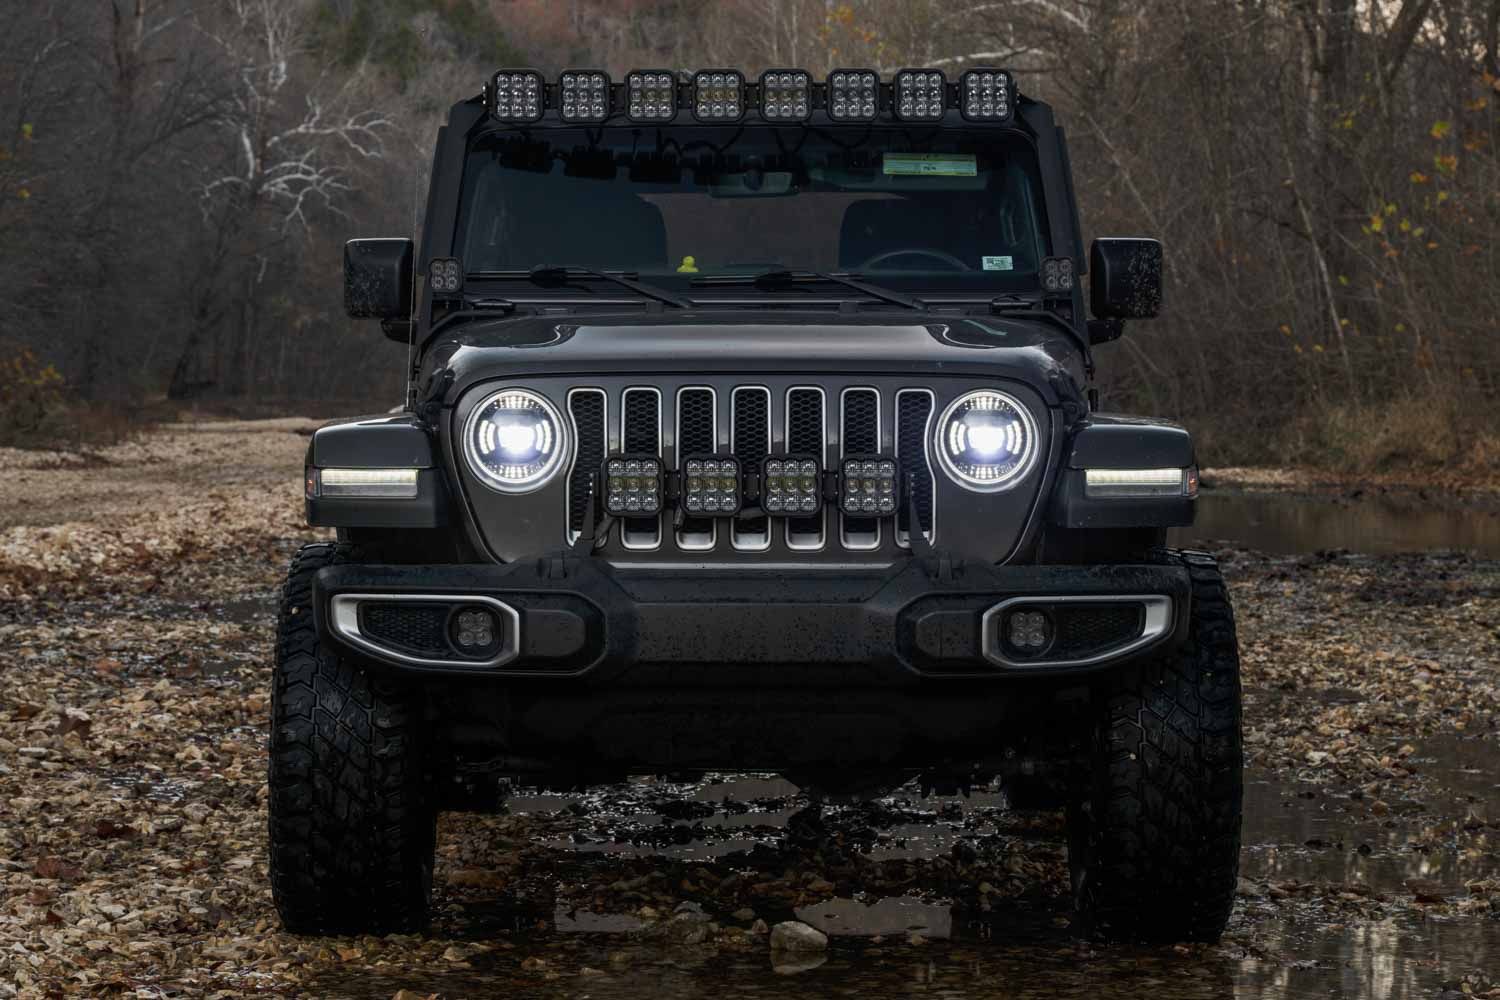 Jeep Wrangler Headlight Fuse Location: Essential Guide